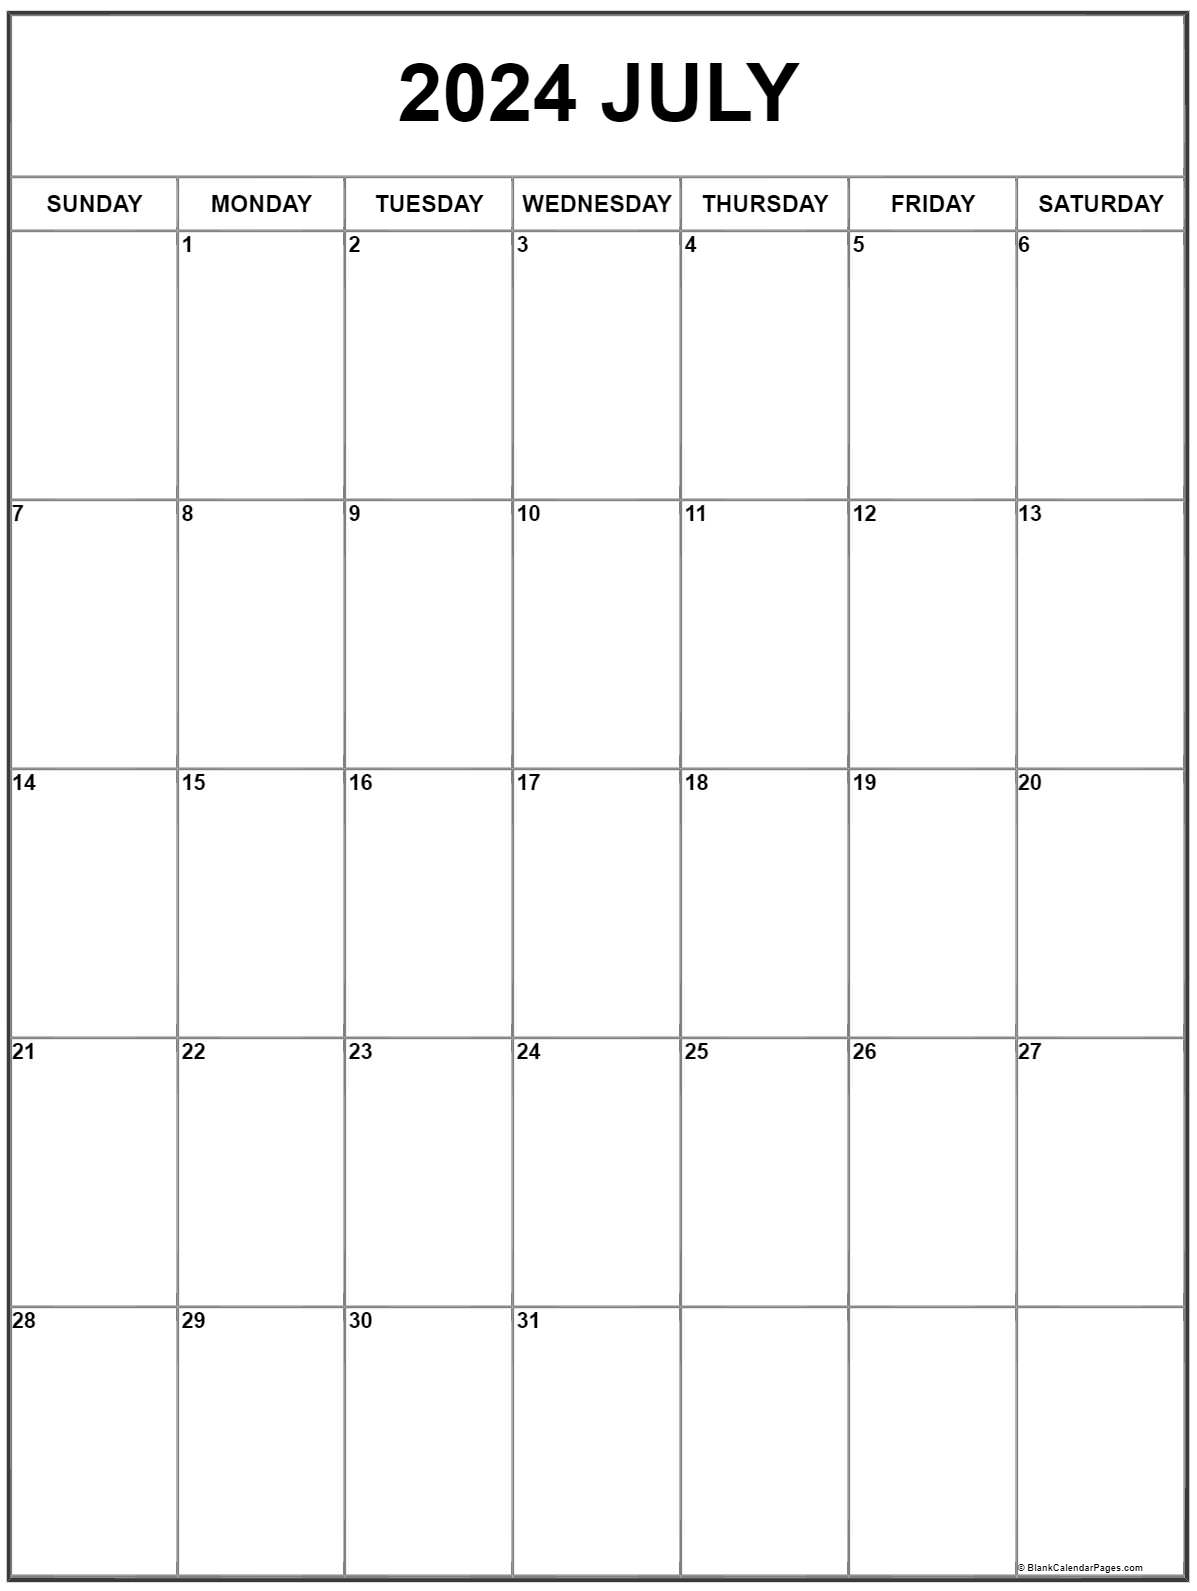 january-2023-vertical-calendar-portrait-2023-january-calendars-handy